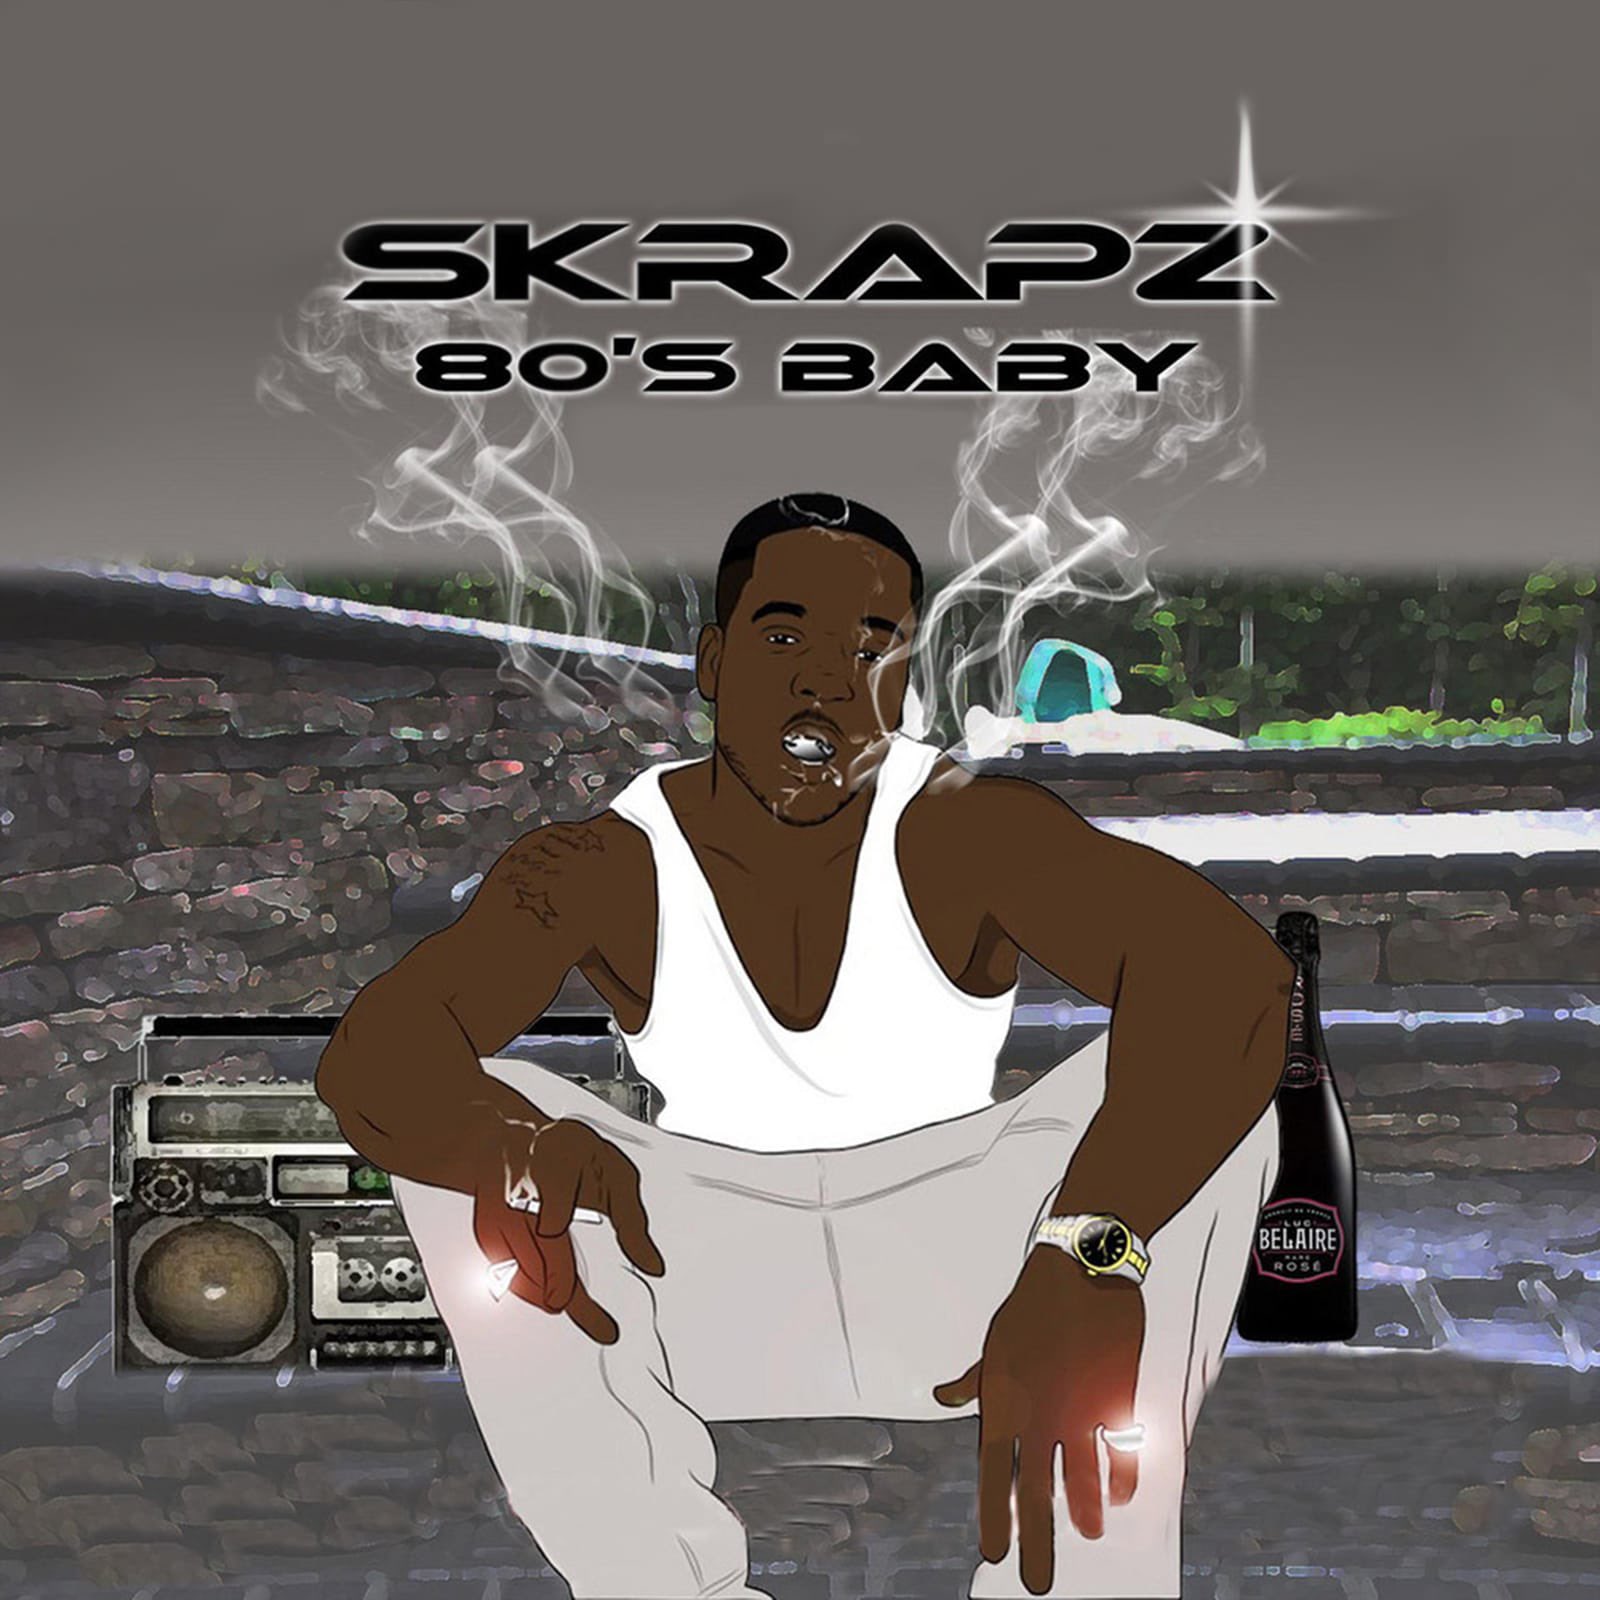 skrapz 80s baby mixtape hits streaming services